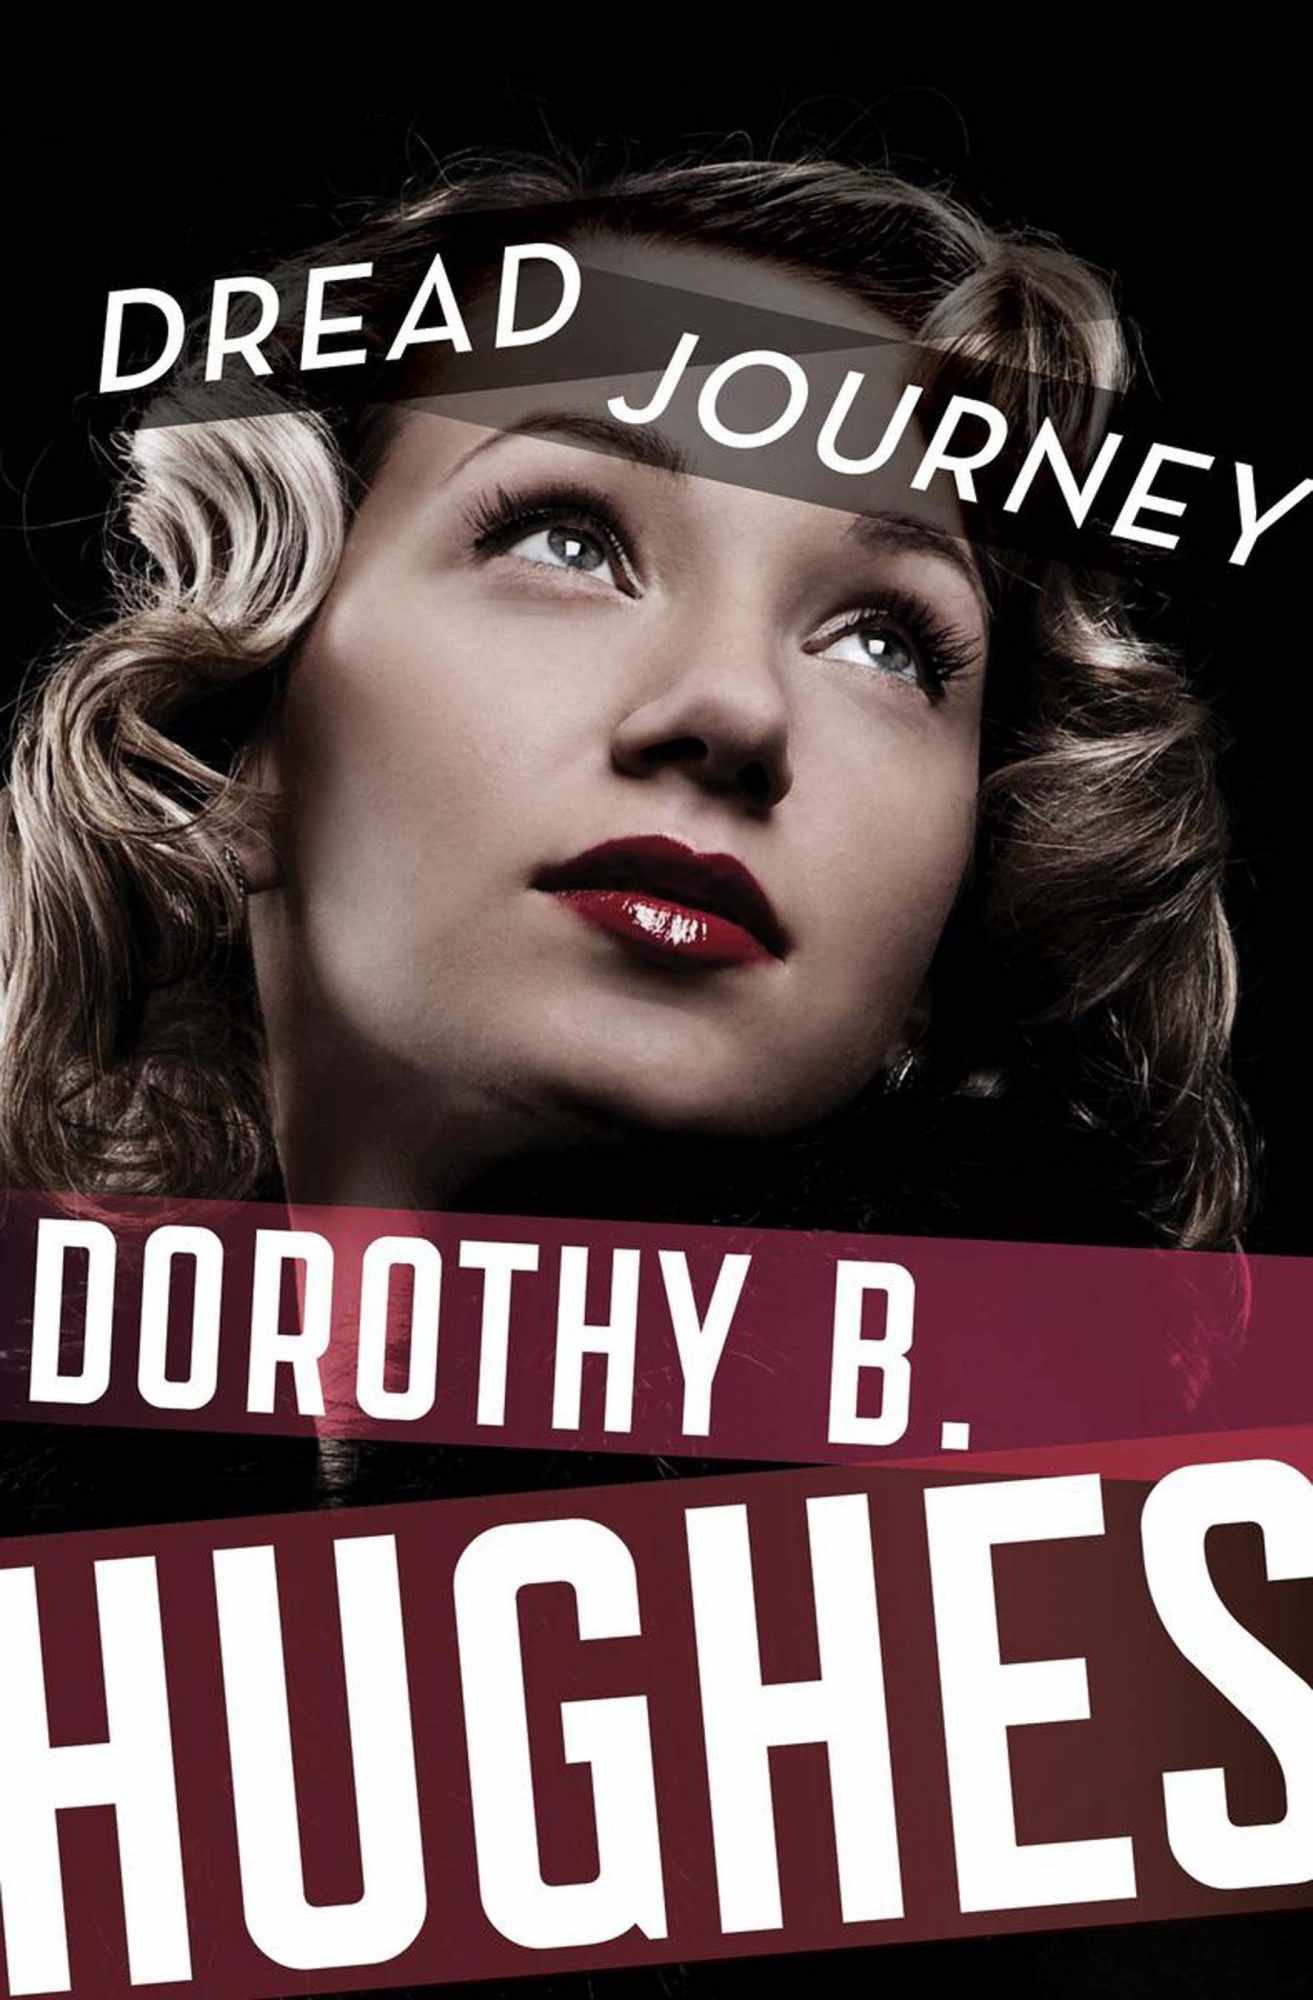 Dread Journey by Dorothy B. Hughes (1945)